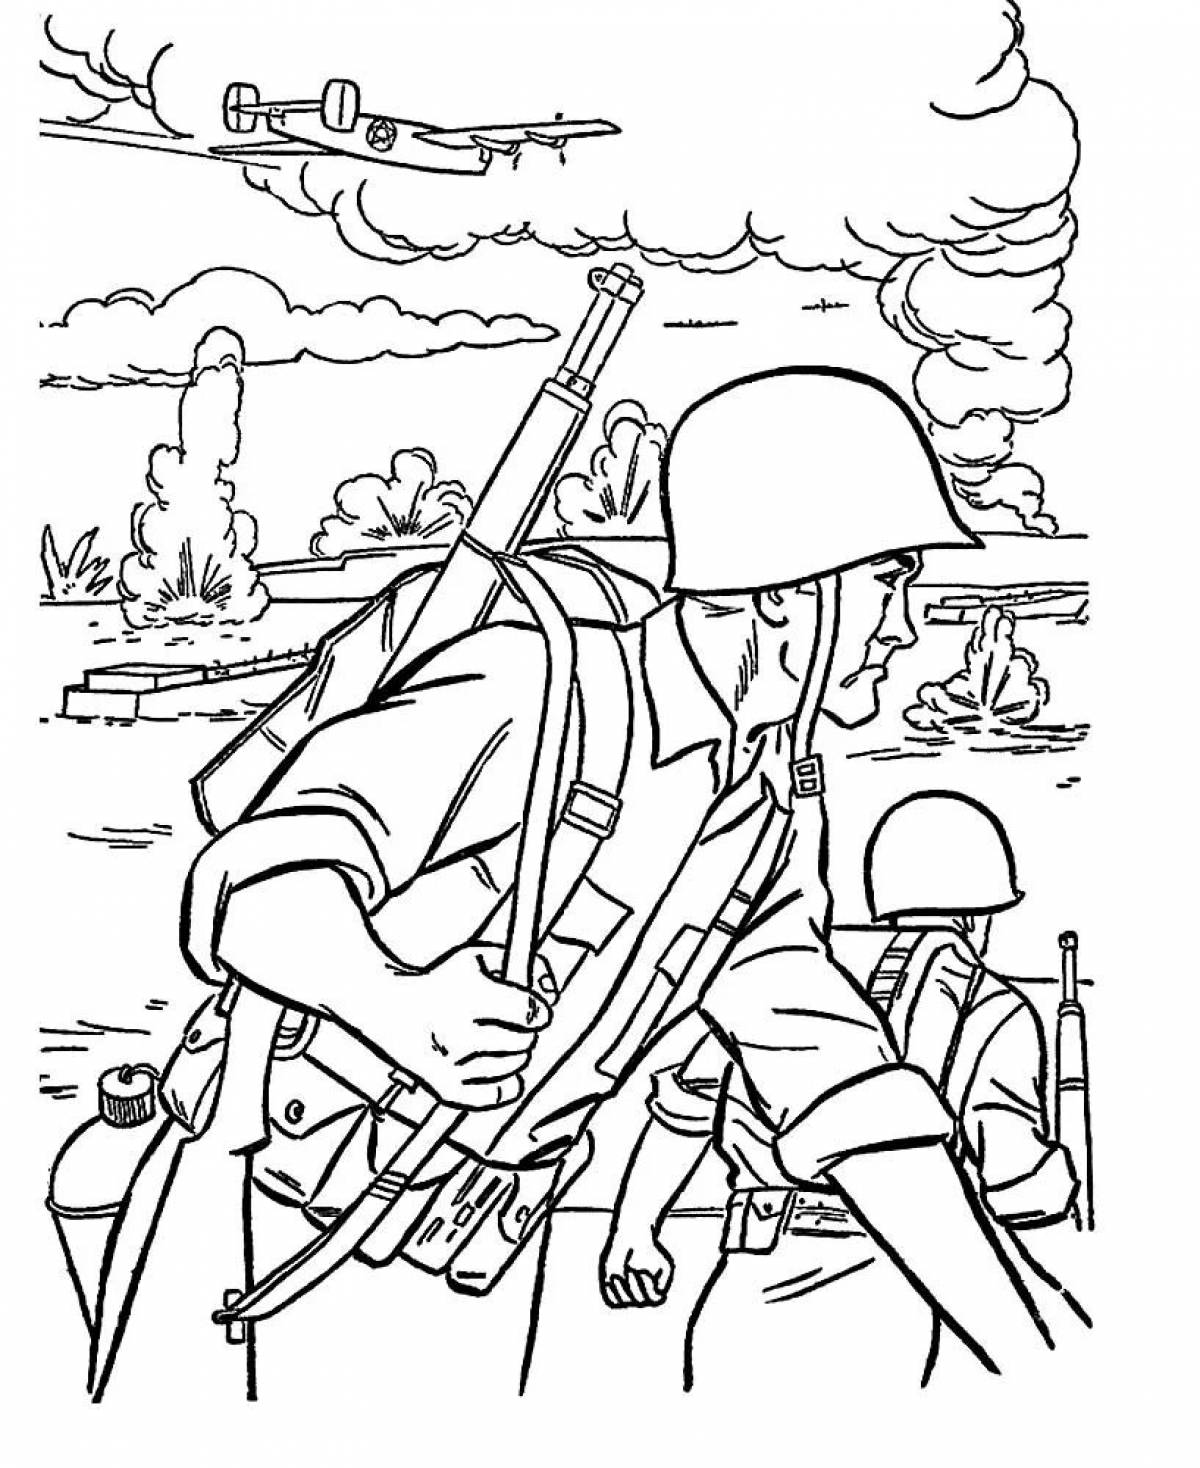 Children of war drawing #13